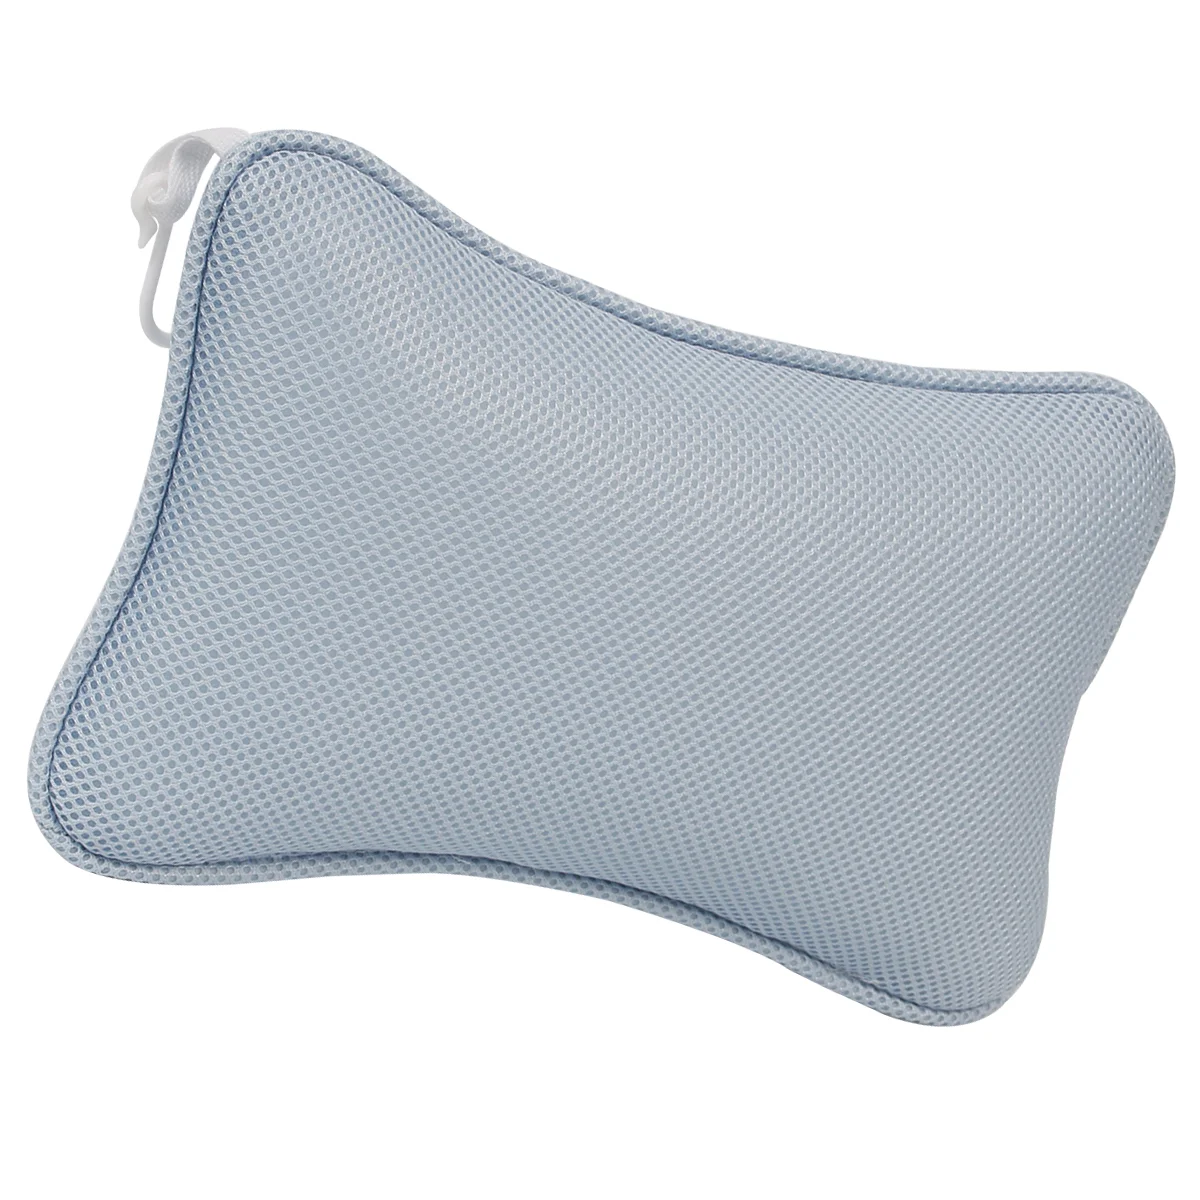 

Pillow Bath Bathtub Tub Neck Spa Suction Pillows Shower Cushion Sucker Pad Head Headrest Support Shoulder Rest Accessories Cups